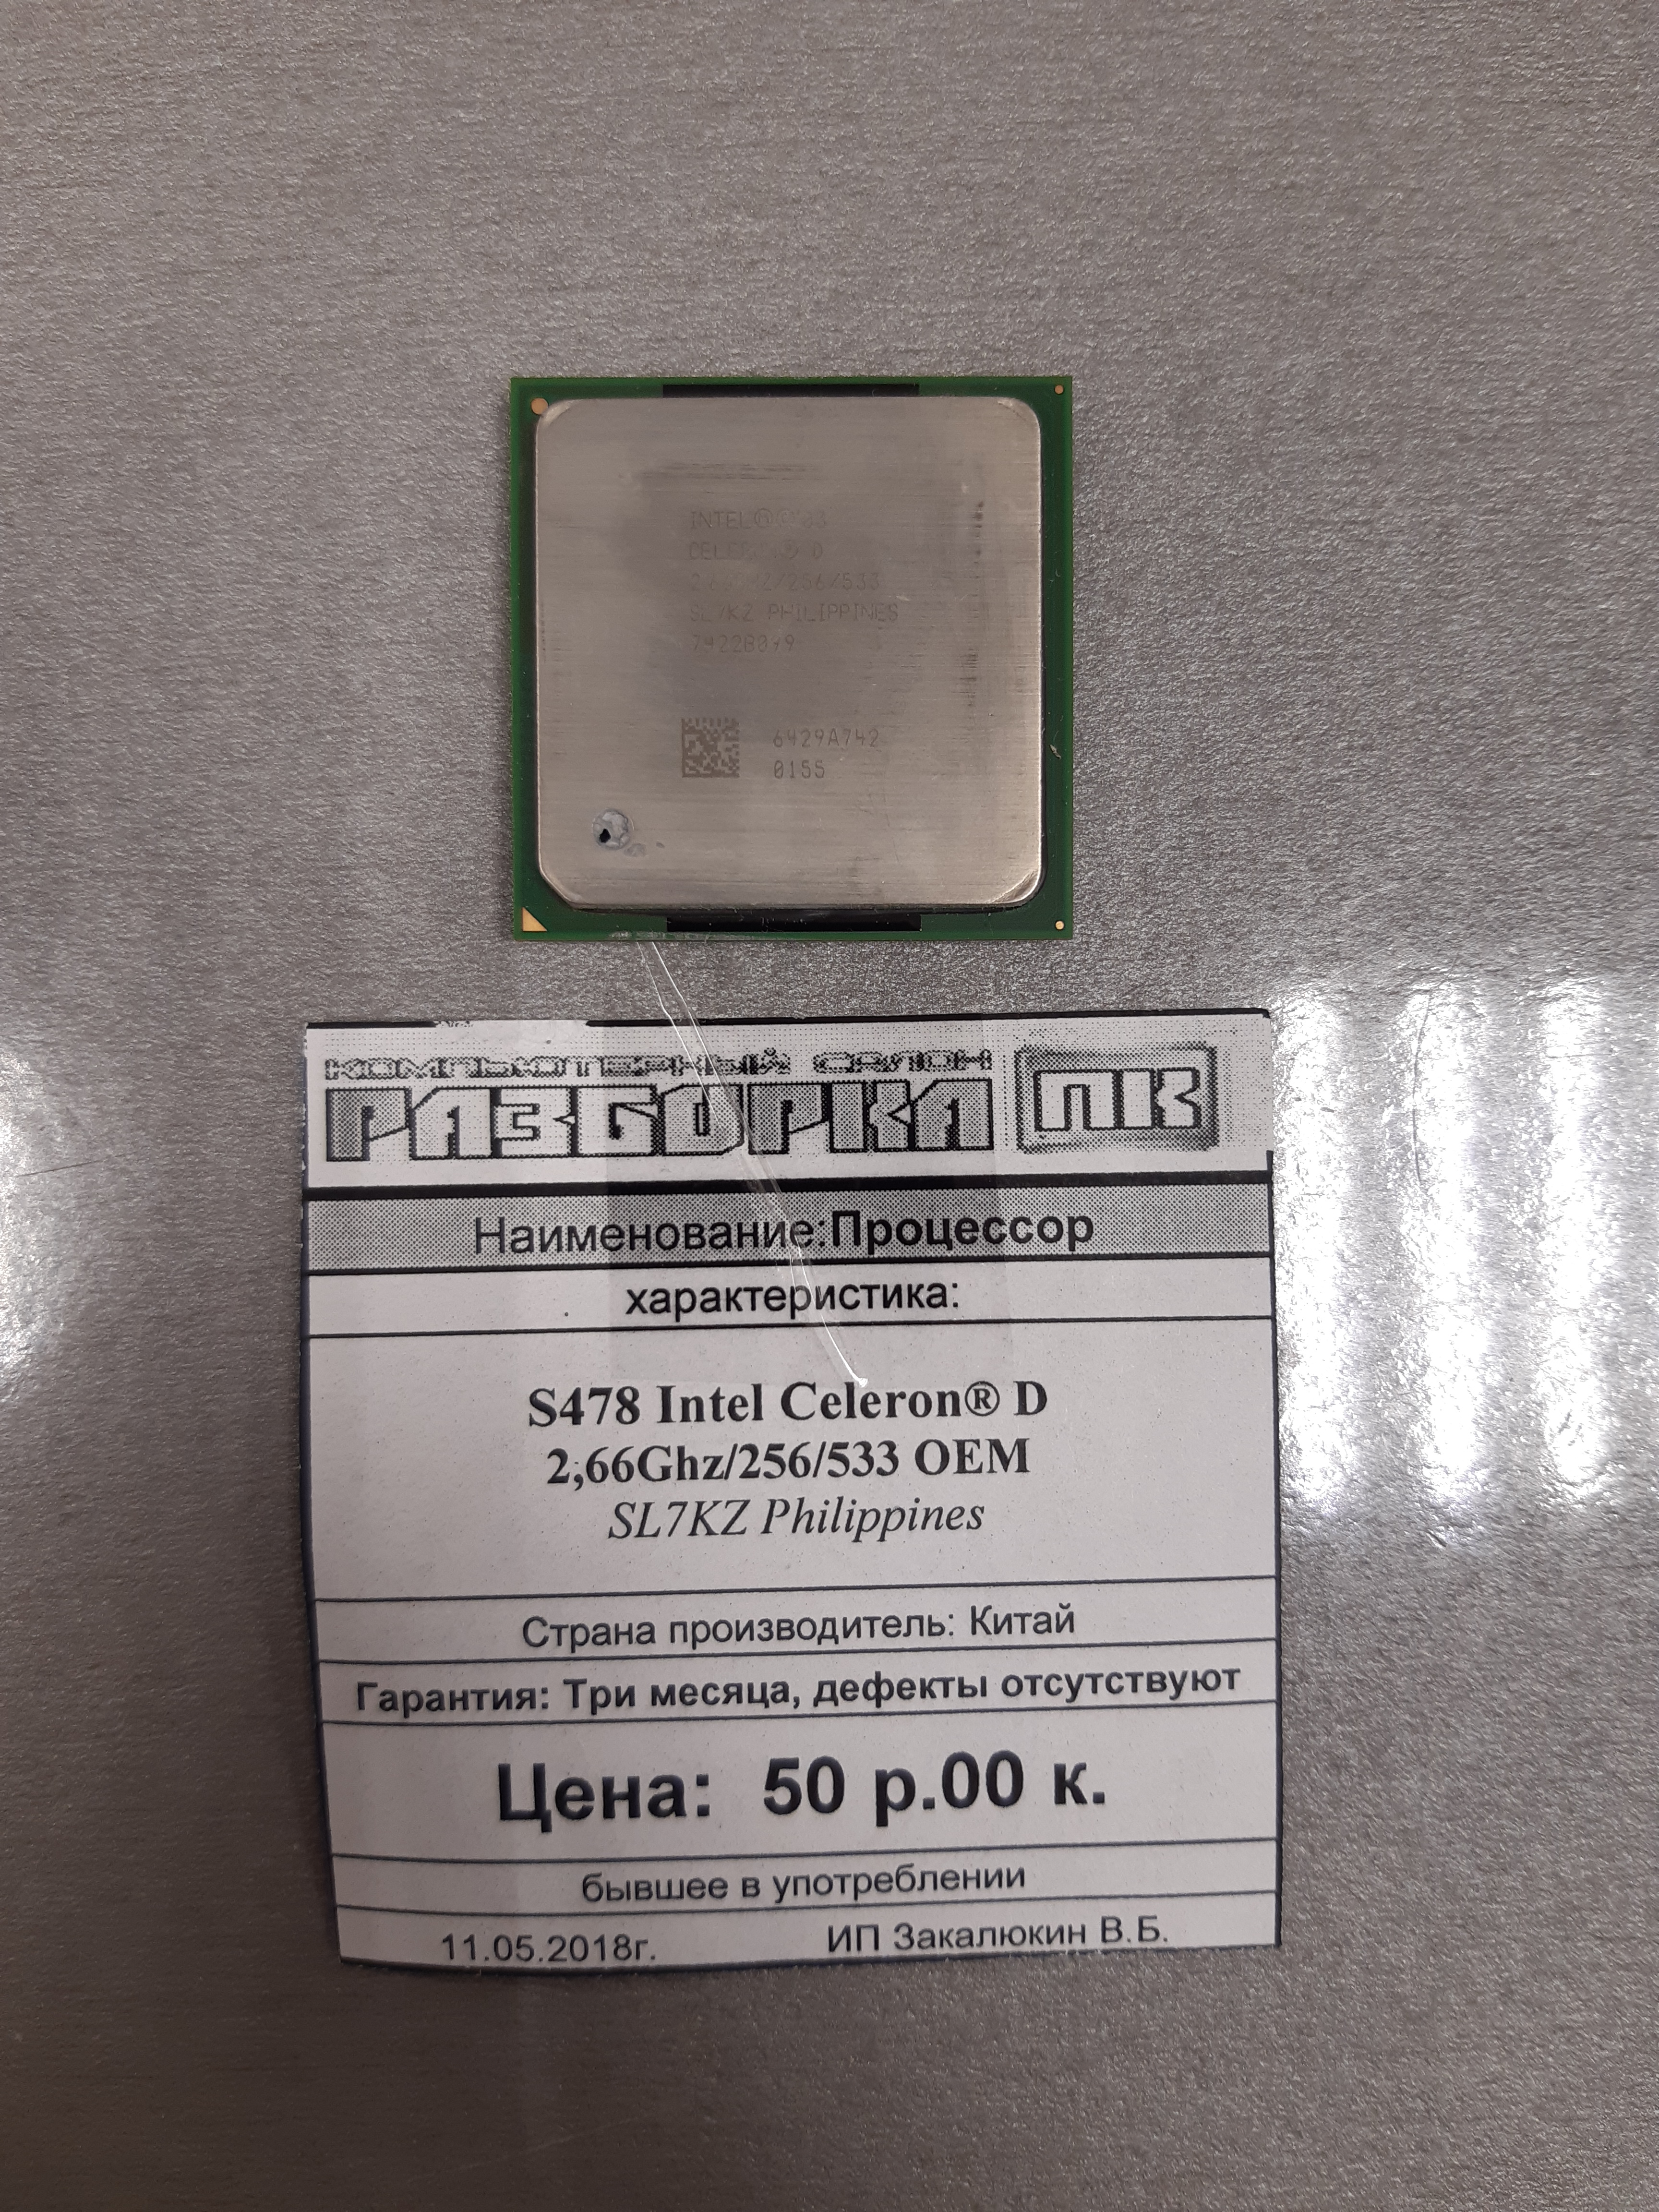 Процессор S478 Intel Celeron® D  2,66Ghz/256/533